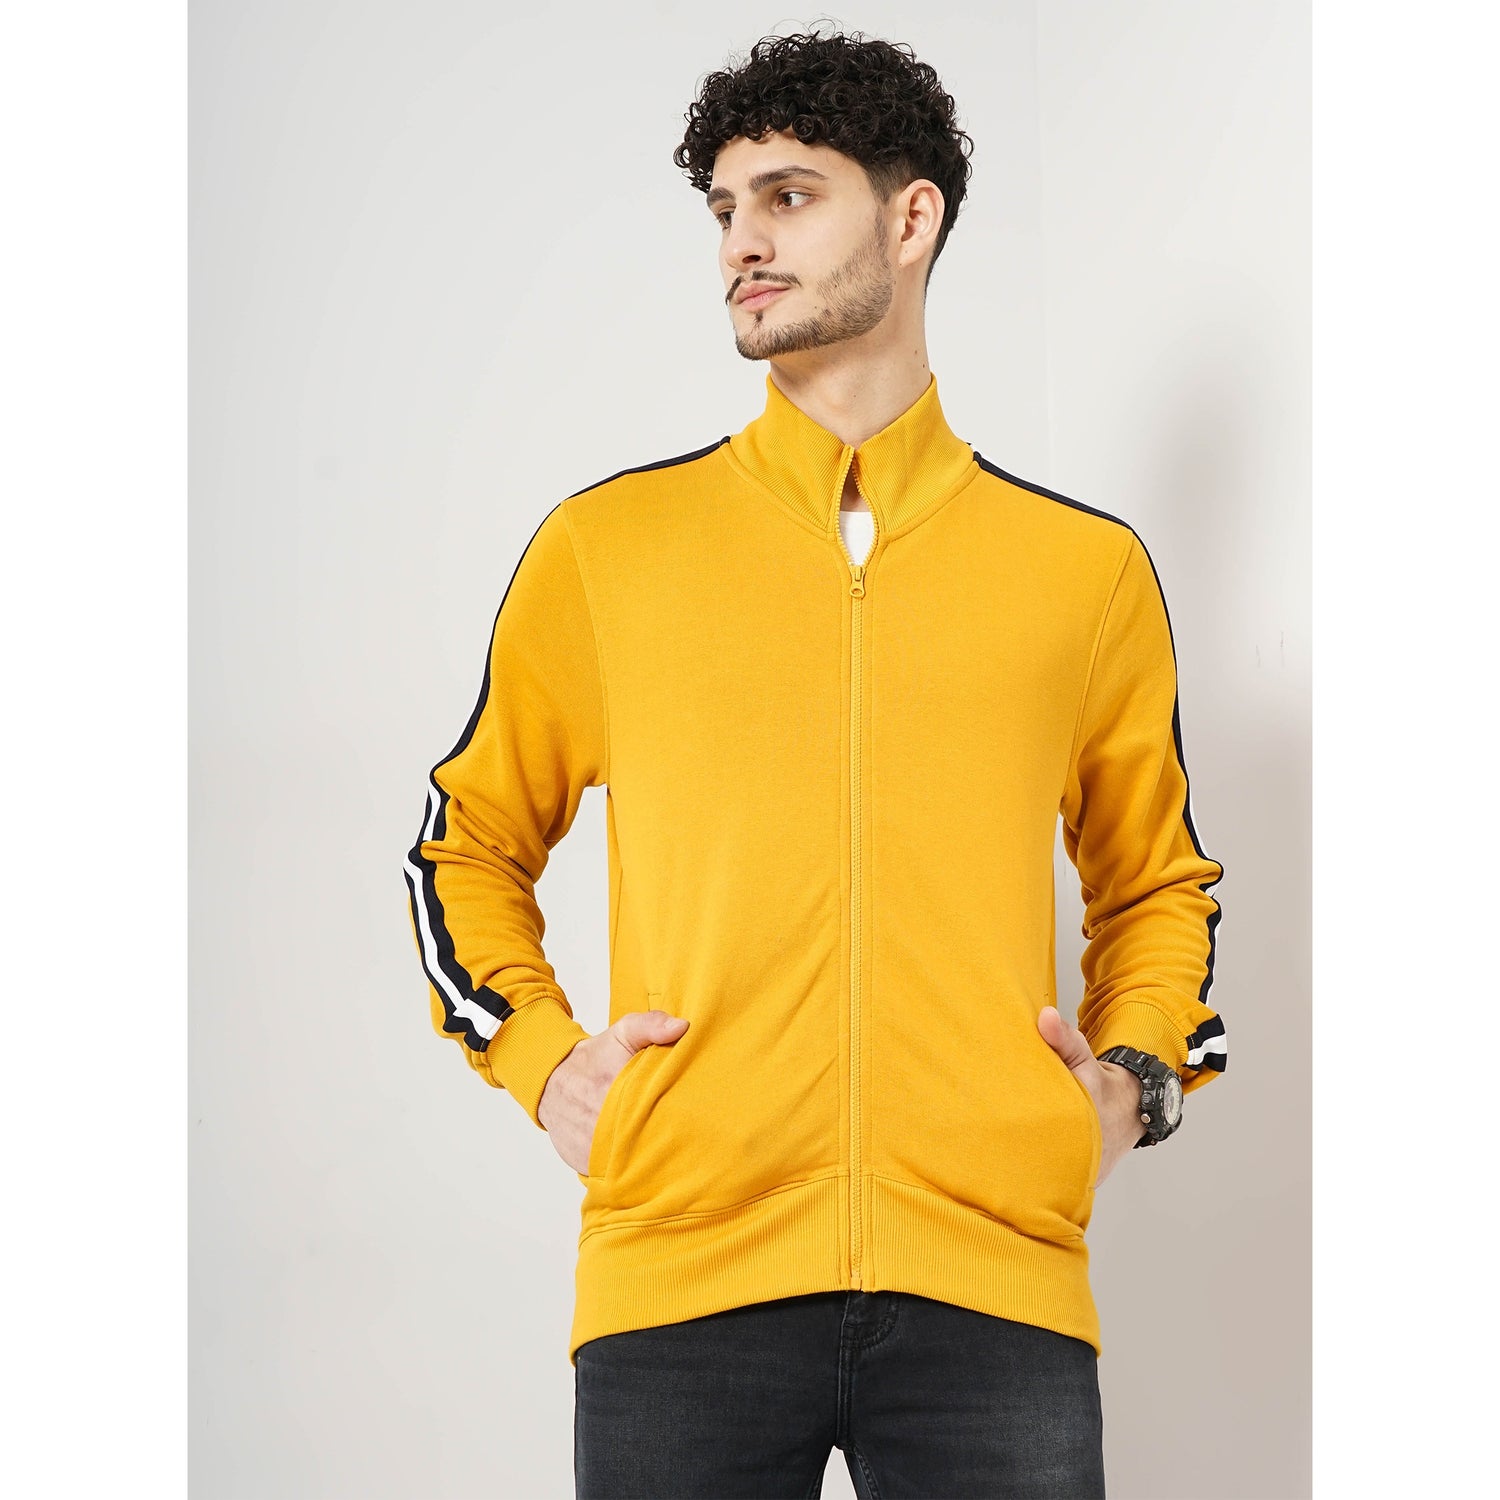 Solid Yellow full Sweatshirt (FETAPESW)